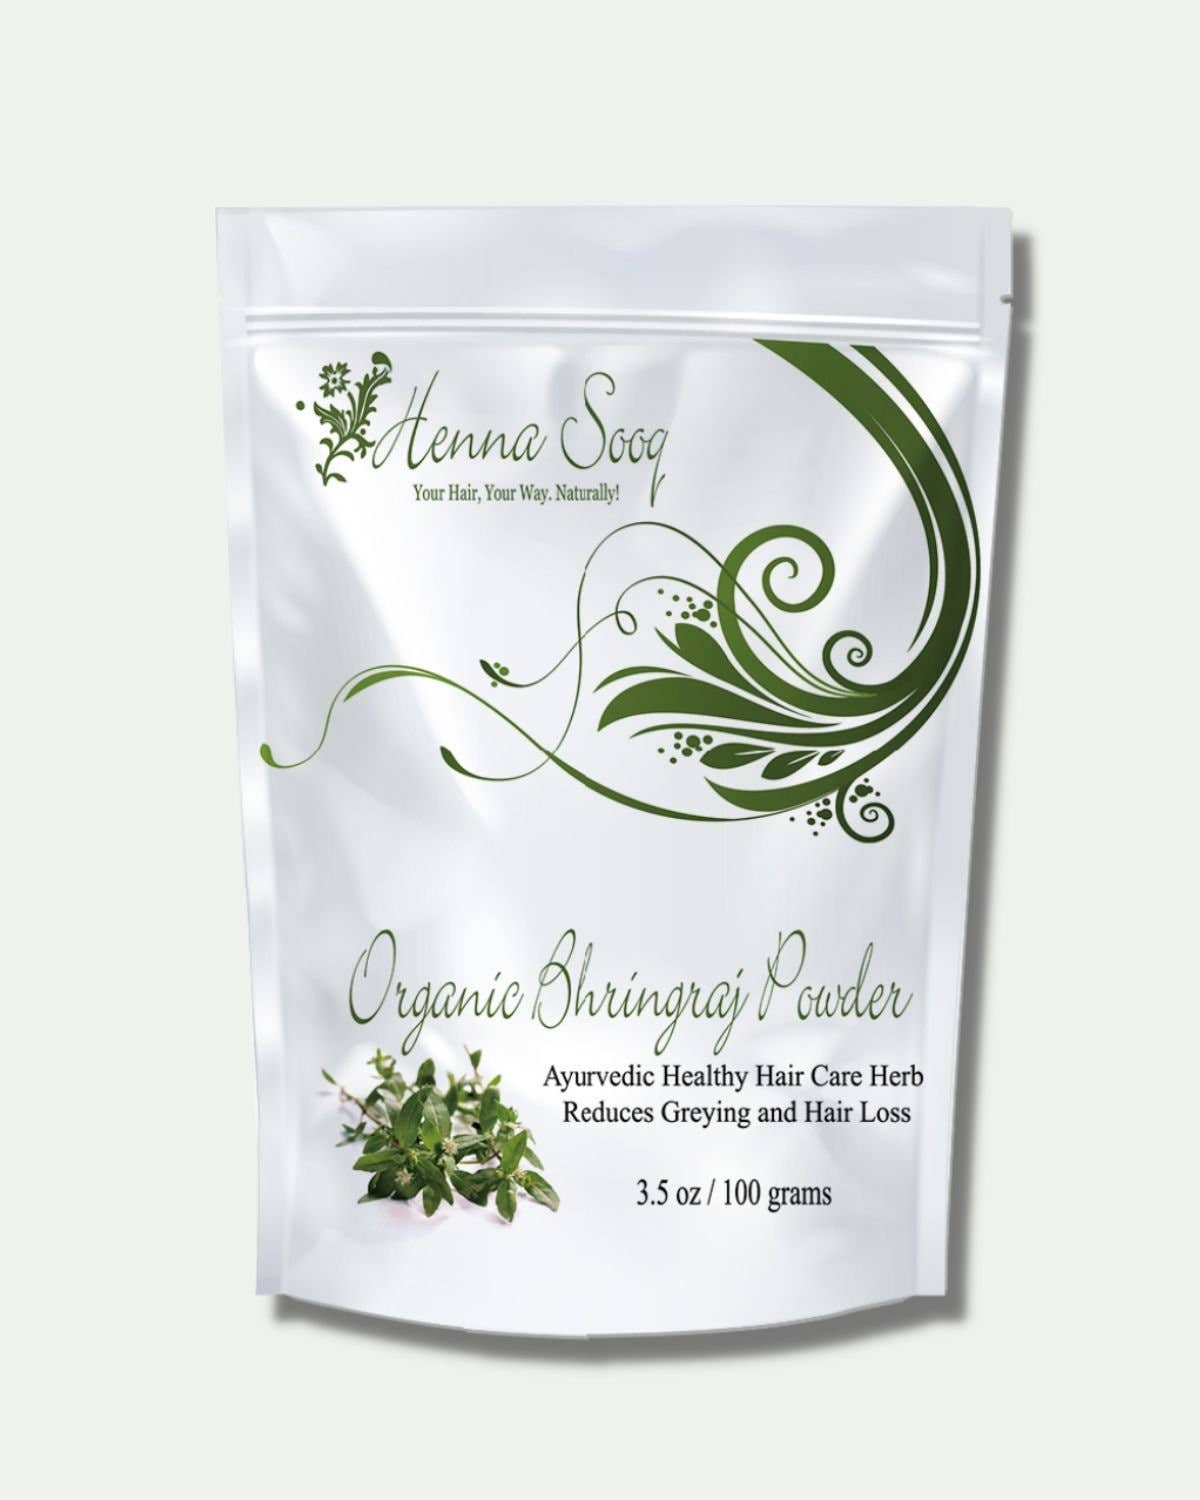 Henna Sooq - Organic Bhringraj Powder